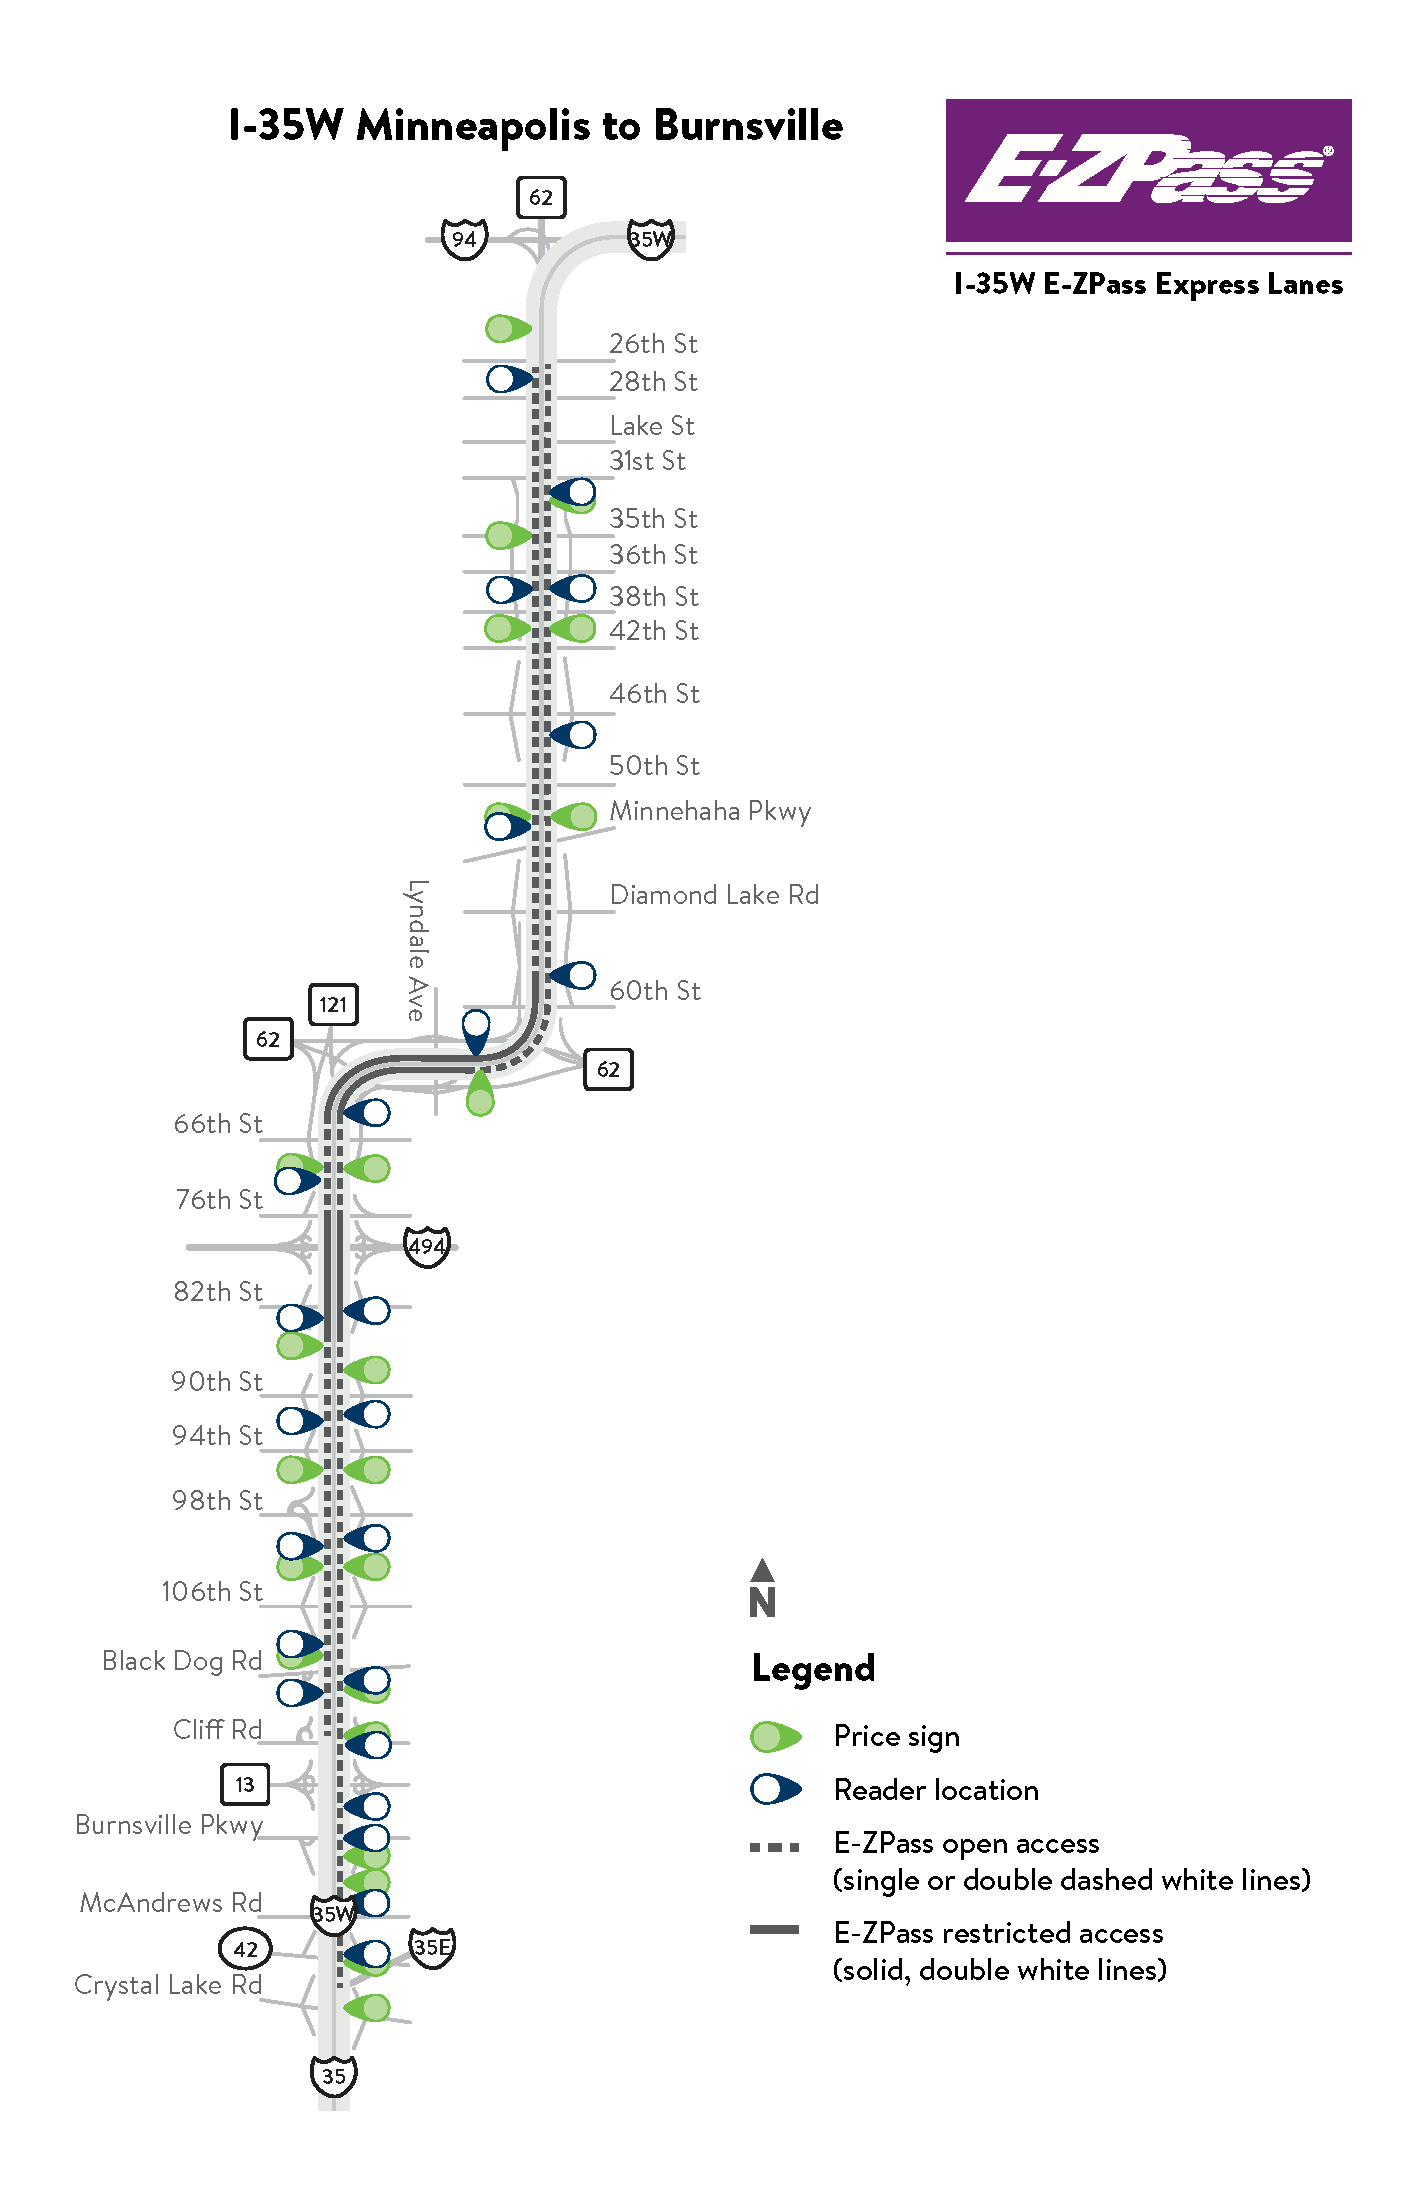 I-394 E-ZPass express lane map from Burnsville to Minneapolis